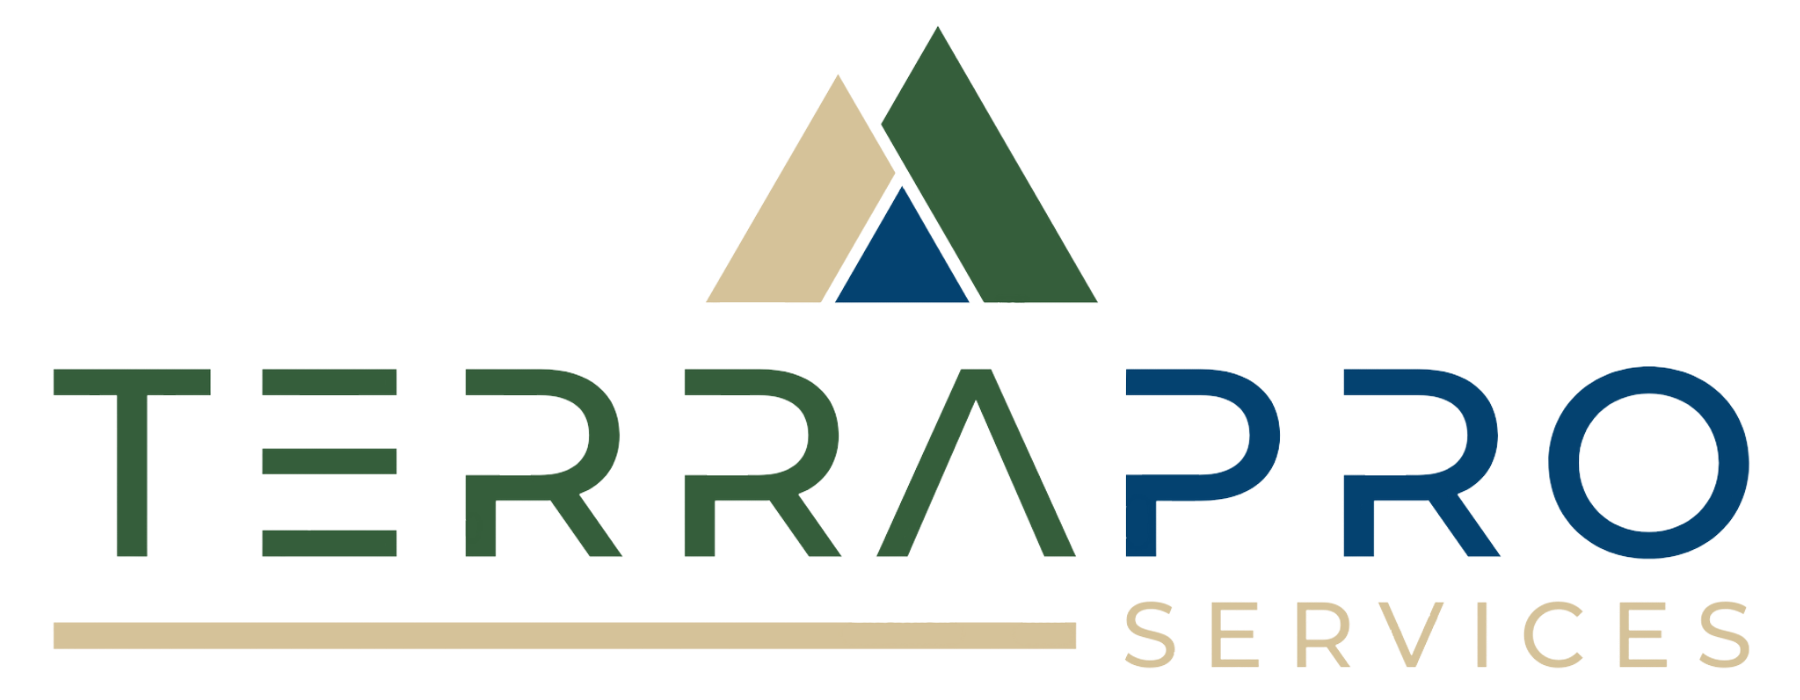 TerraPro Services Logo